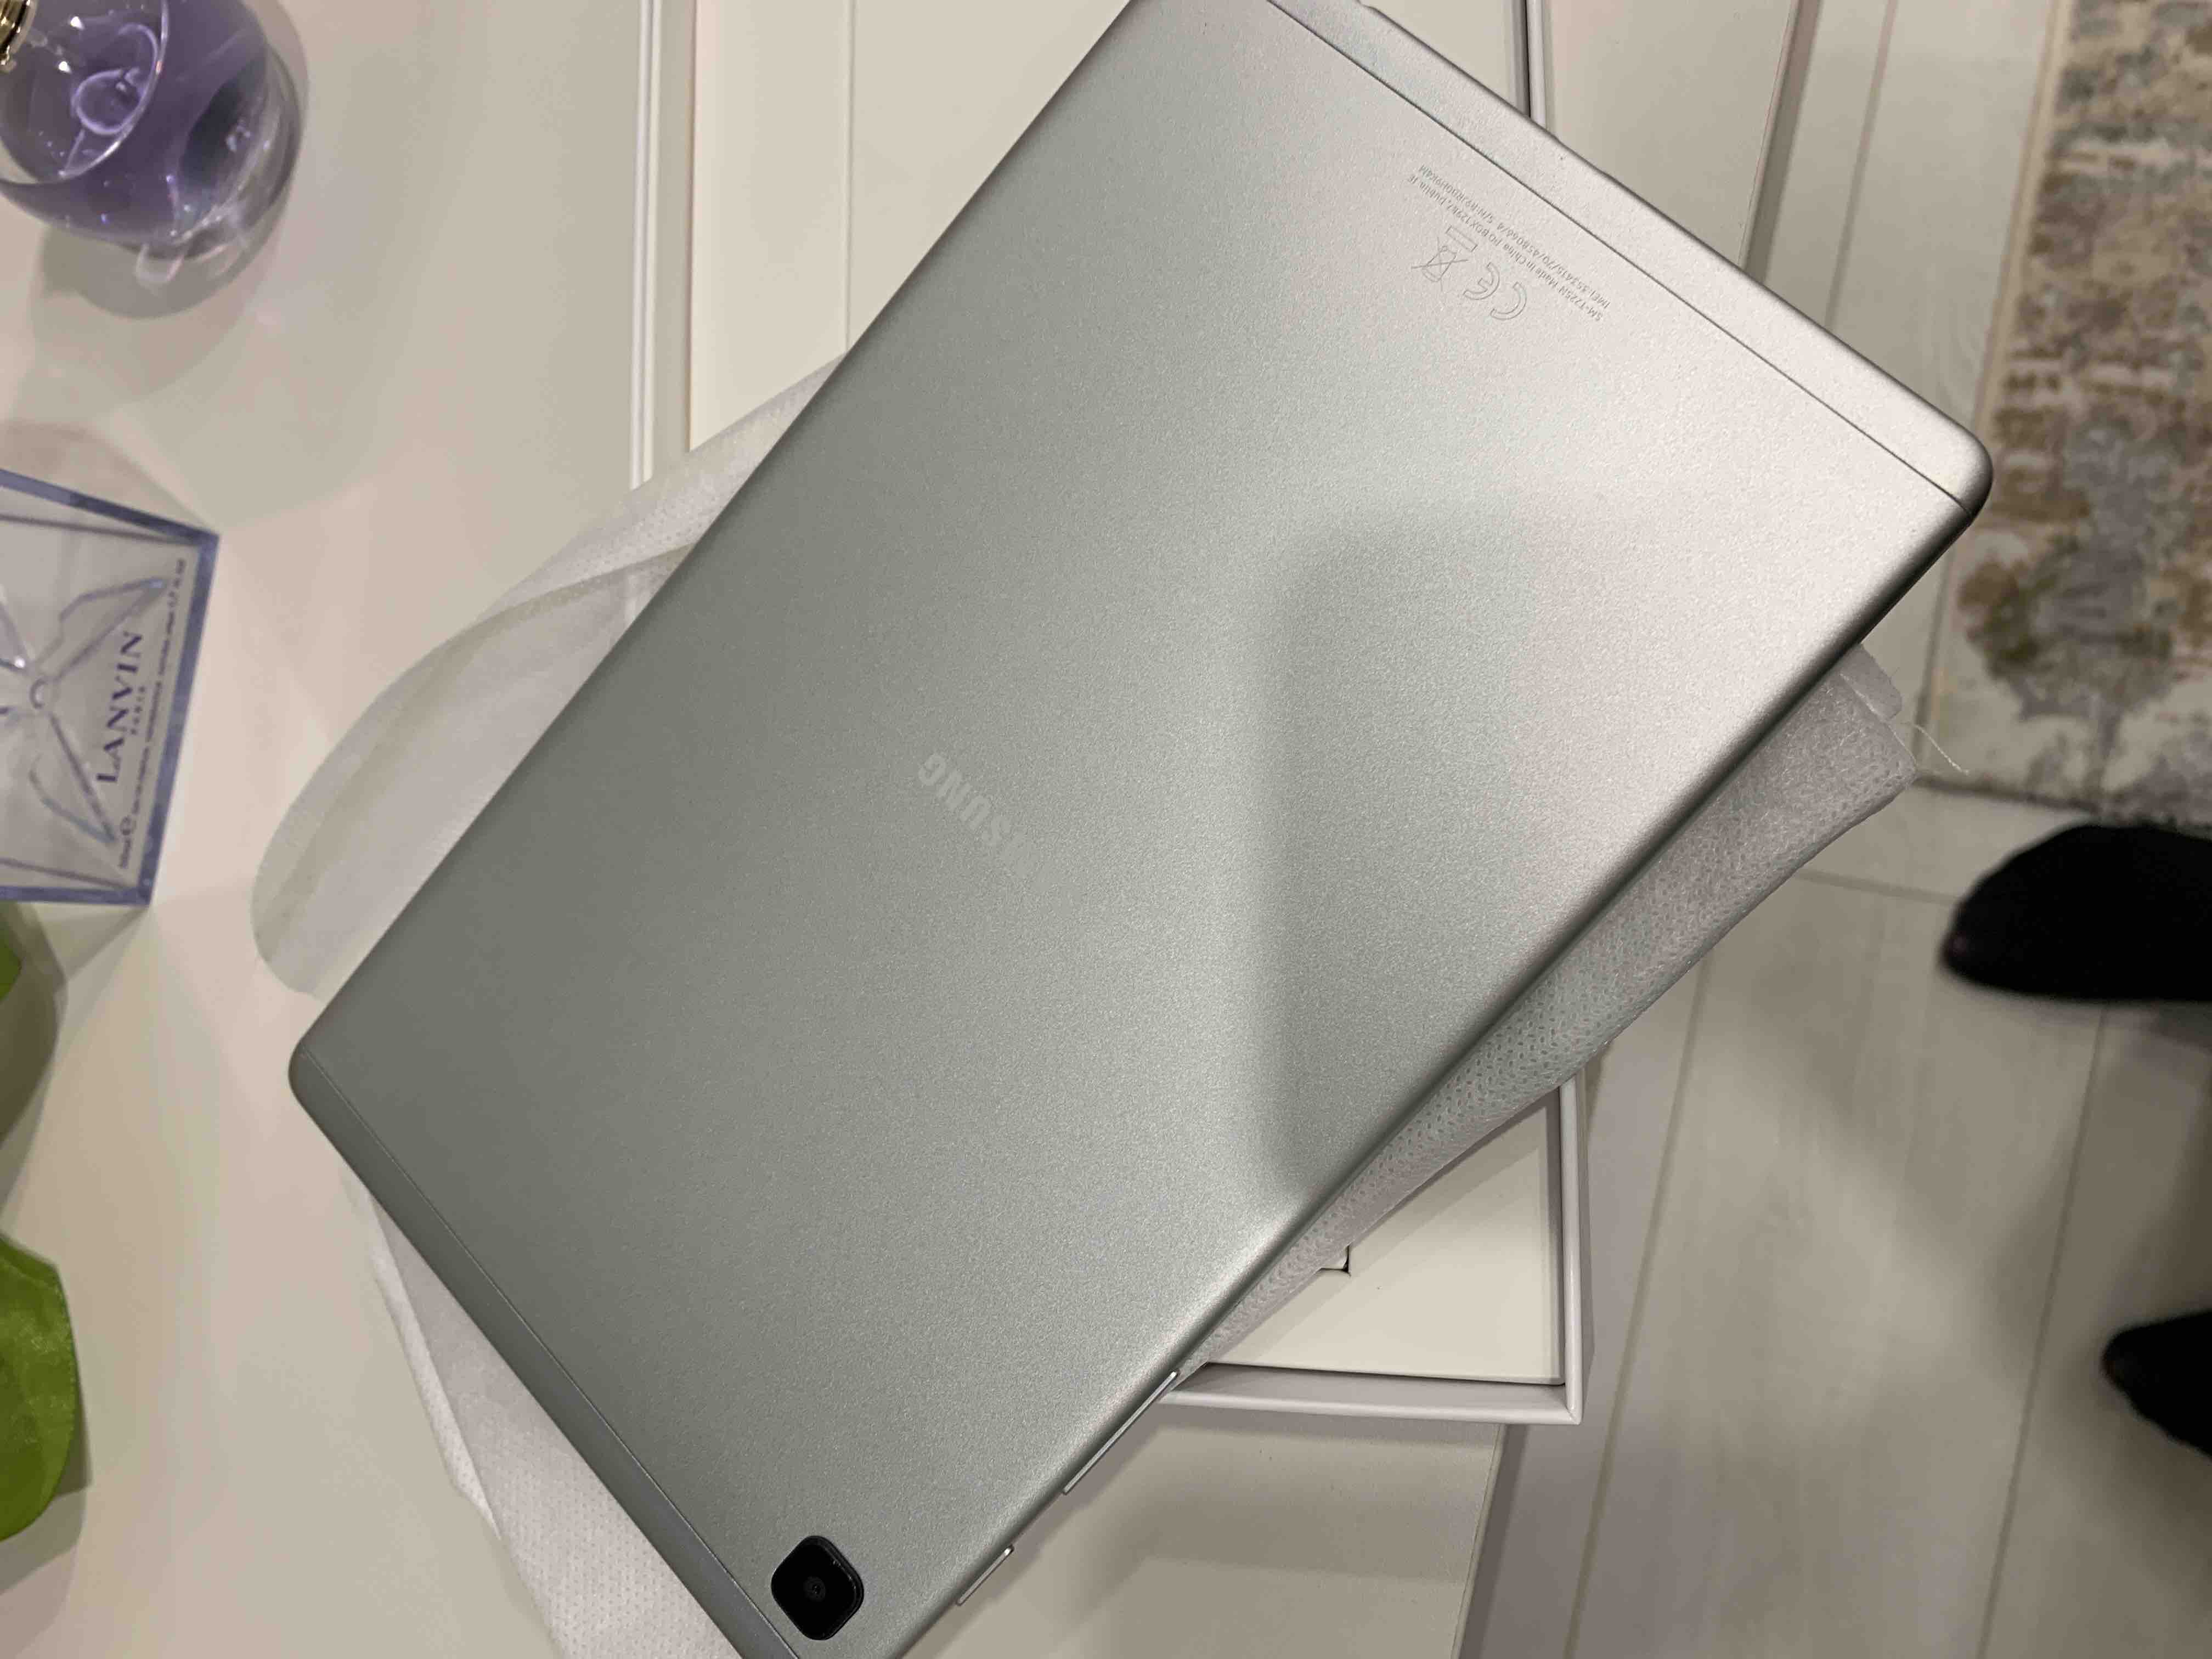 Galaxy Tab A7 Lite LTE, SM-T225NZSLMEB